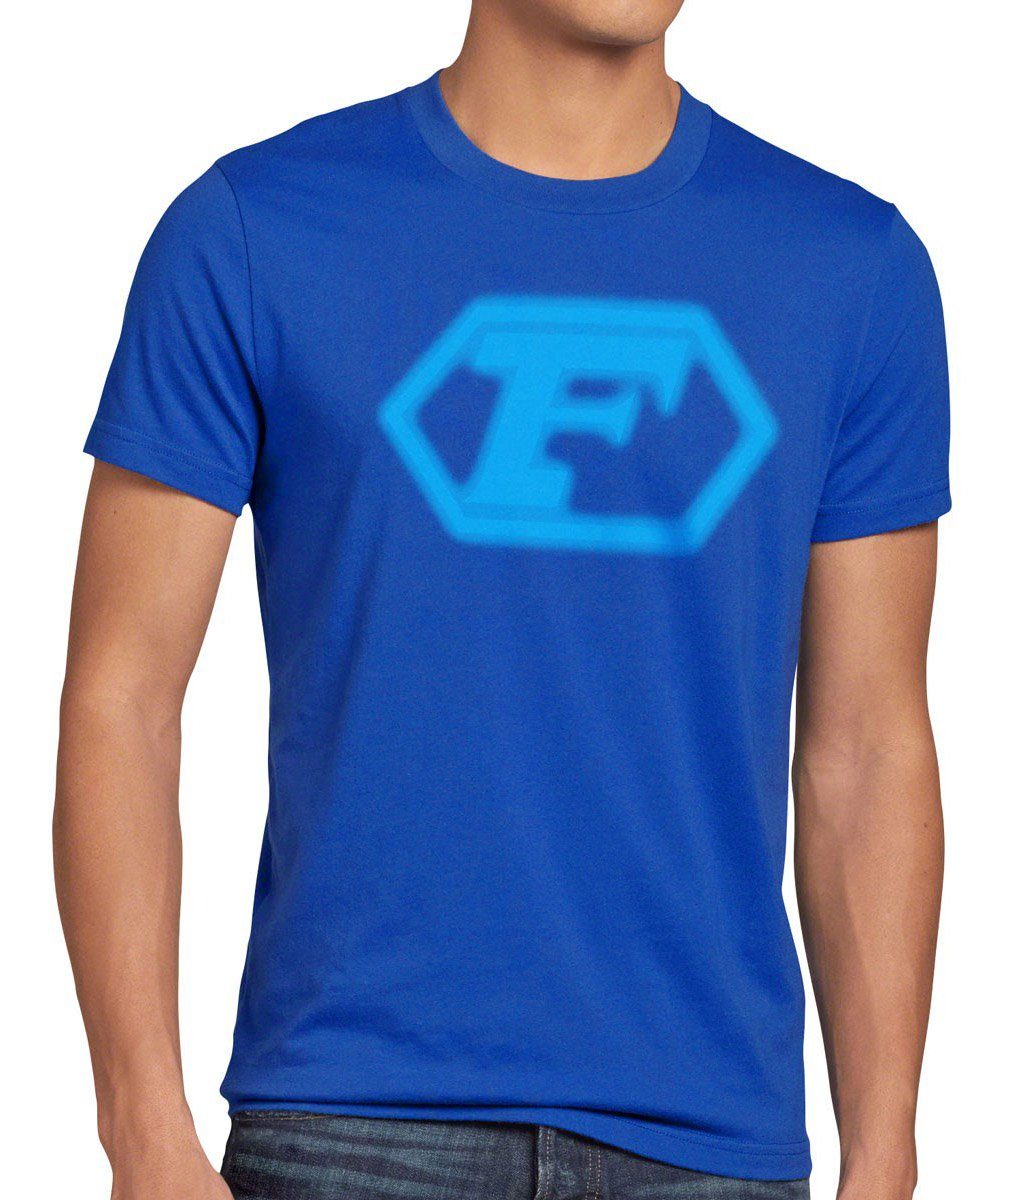 style3 Print-Shirt Herren T-Shirt Captain fiction science comic Comet serie anime logo blau future Kult